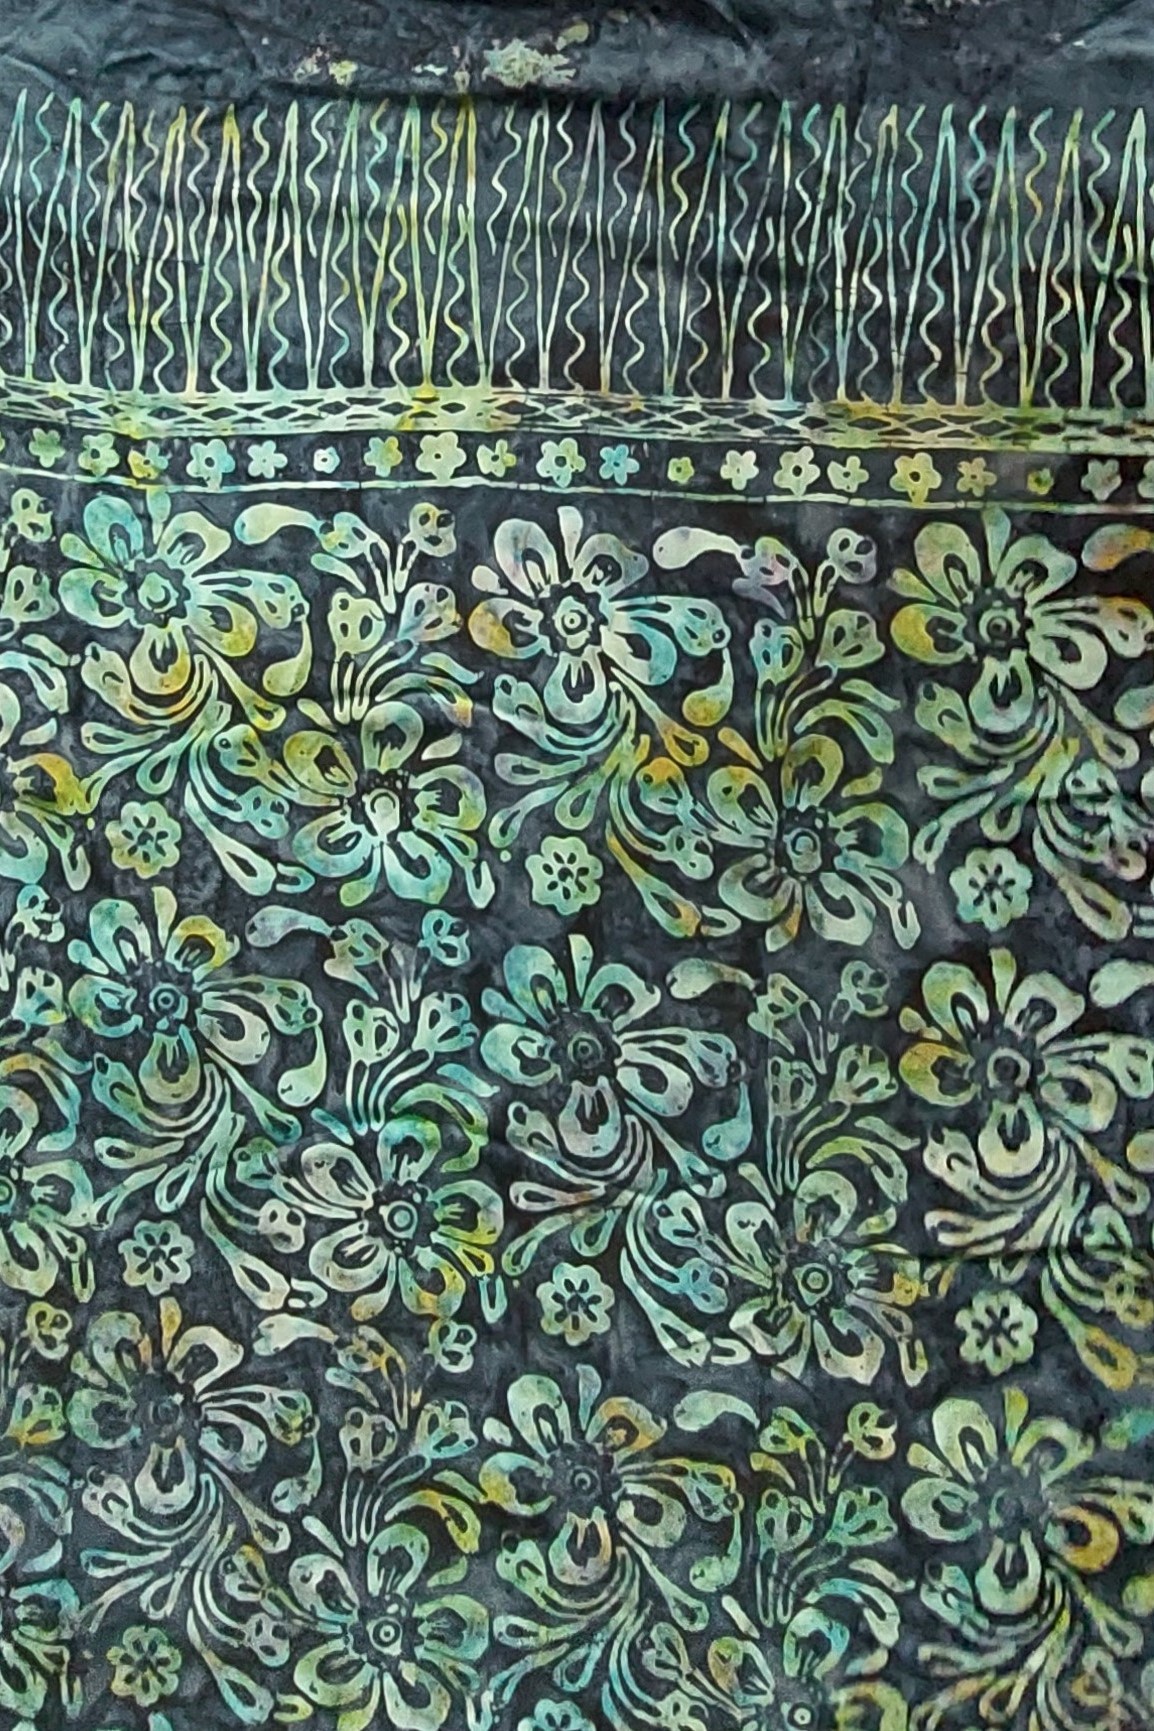 Sarong Batik / tyg viskos ca 110 x 200 cm